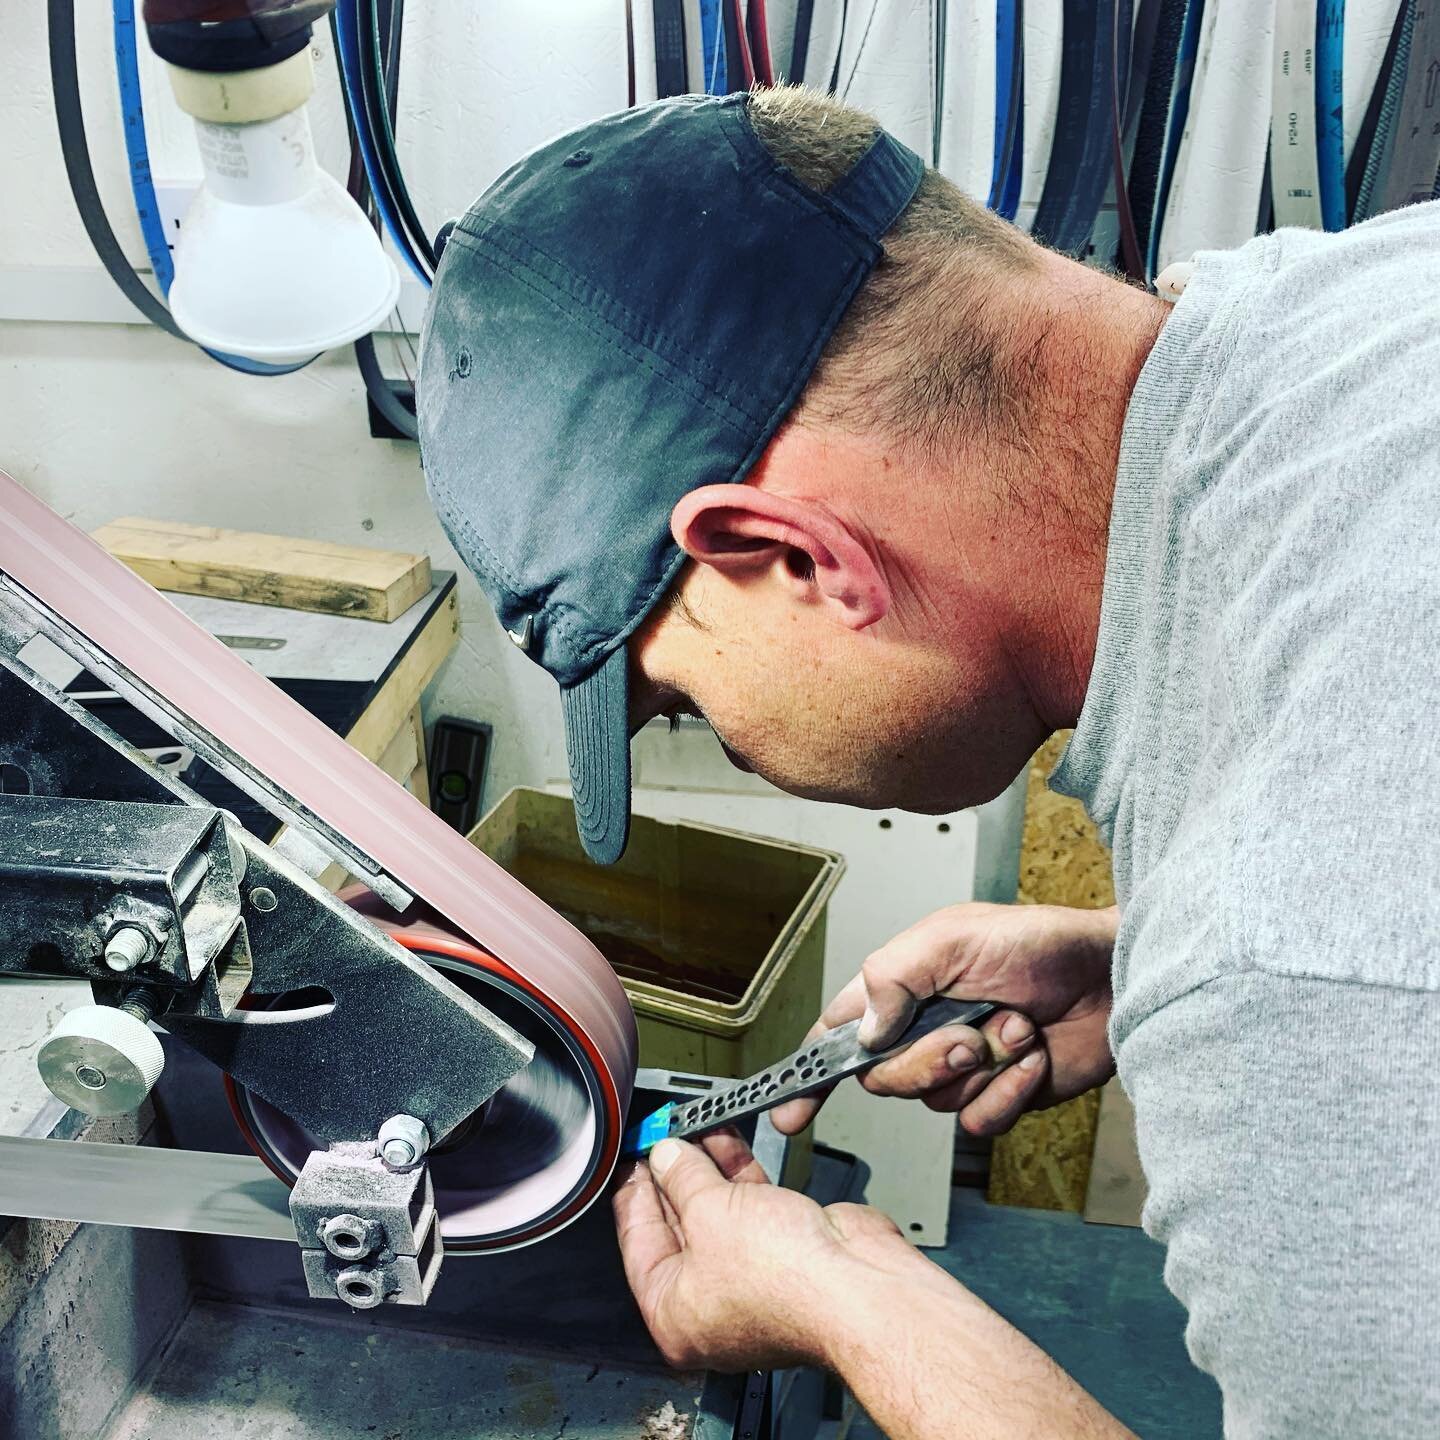 Throwback to visiting @marmajuke_creations and watching a true craftsman at work! 

#knives #knife #knifelife #knifemaking #knifeporn #knive #knivesofinstagram🔪 #marmaduke #custom #madeinengland #madeintheuk #craft #crafts #craftsmanship #customkniv